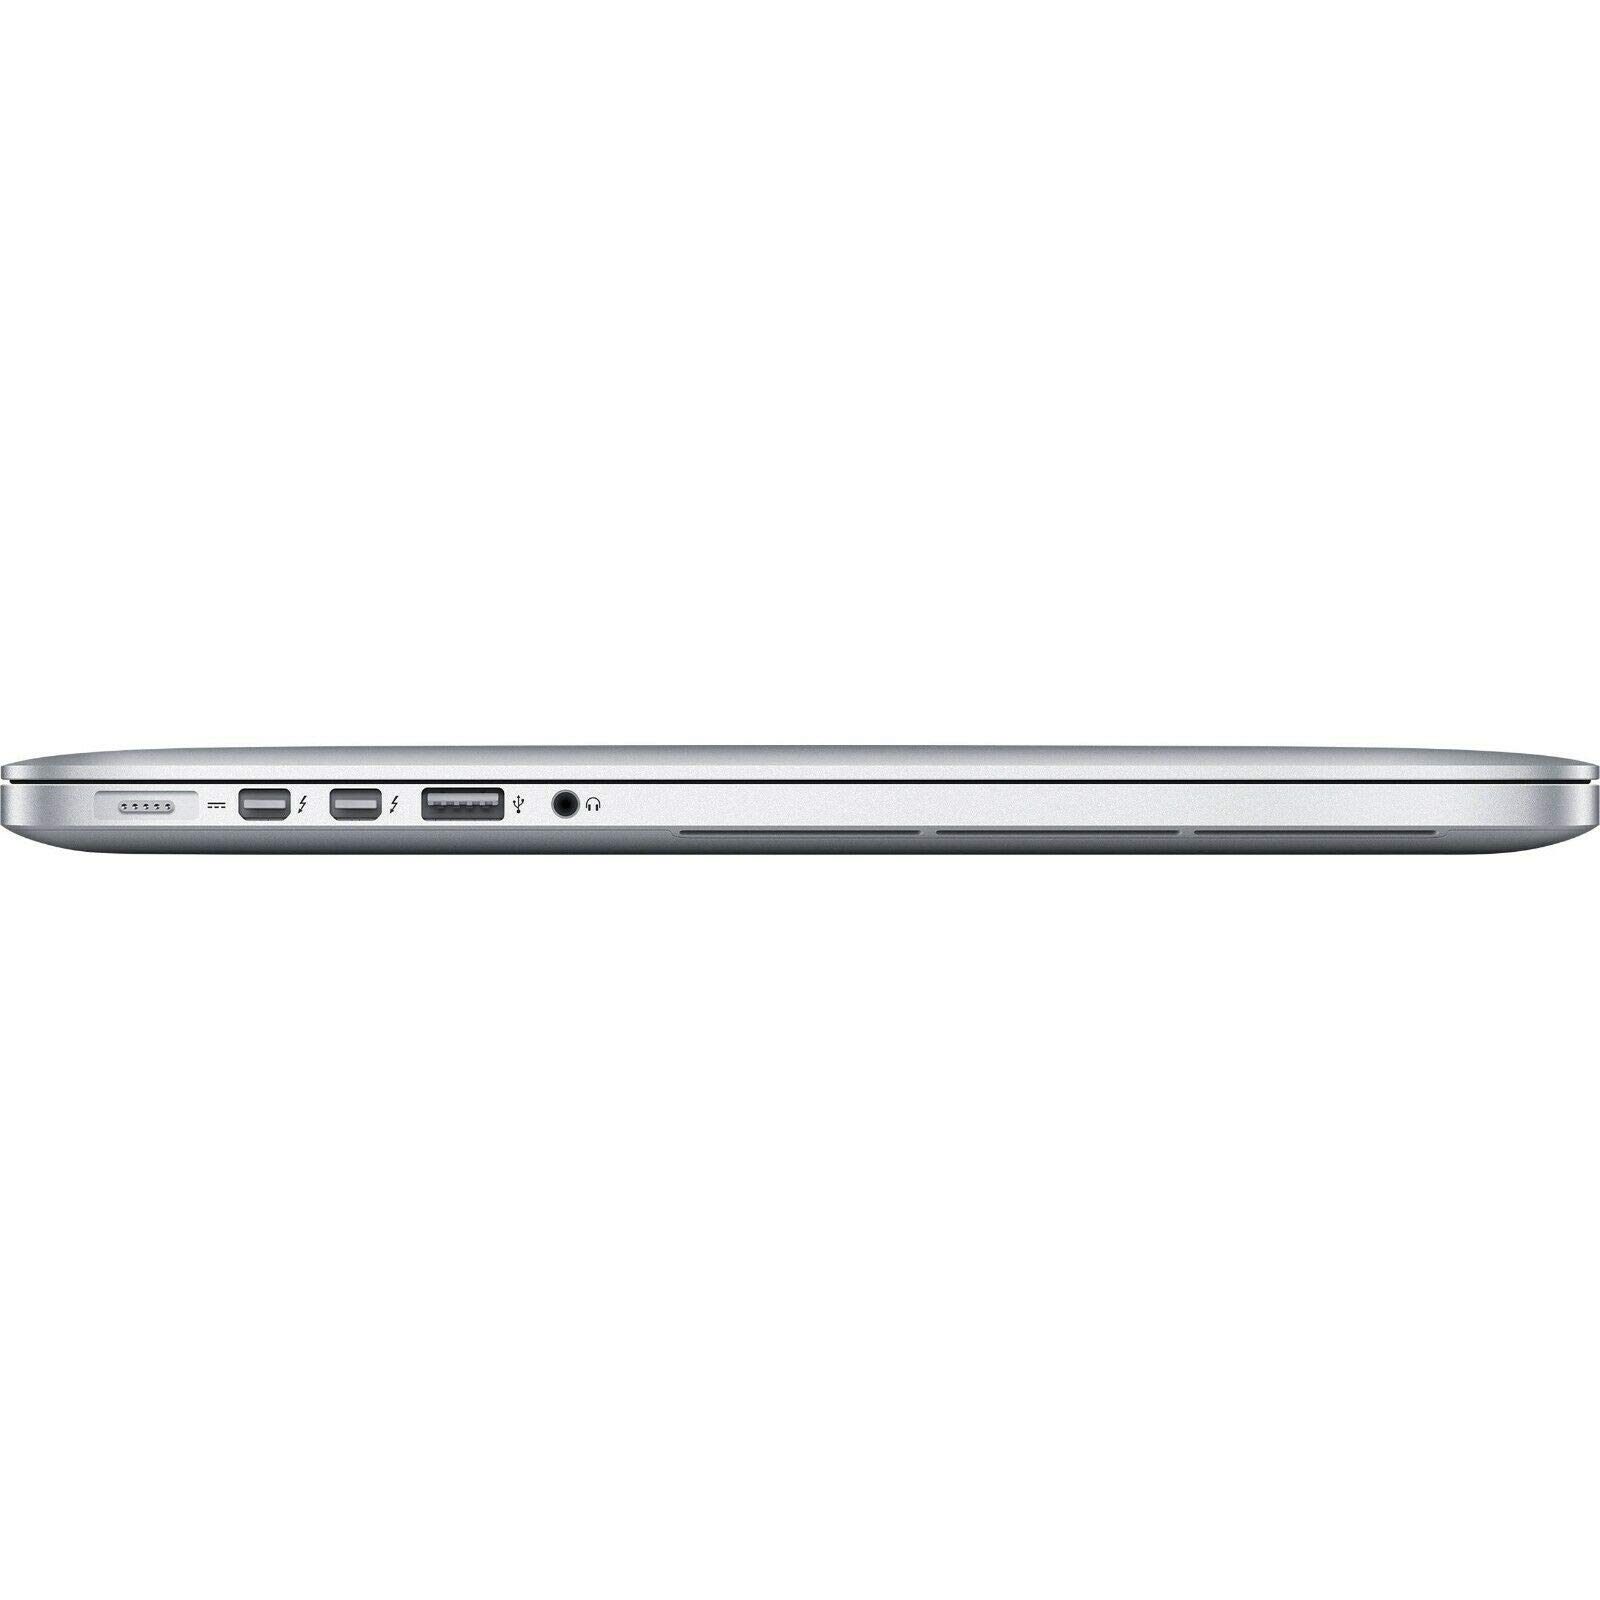 Mid 2015 Apple MacBook Pro with 2.5GHz Intel Core i7 (15.4 inch Retina Display, 4GB RAM, 500GB HDD) Silver (Renewed)